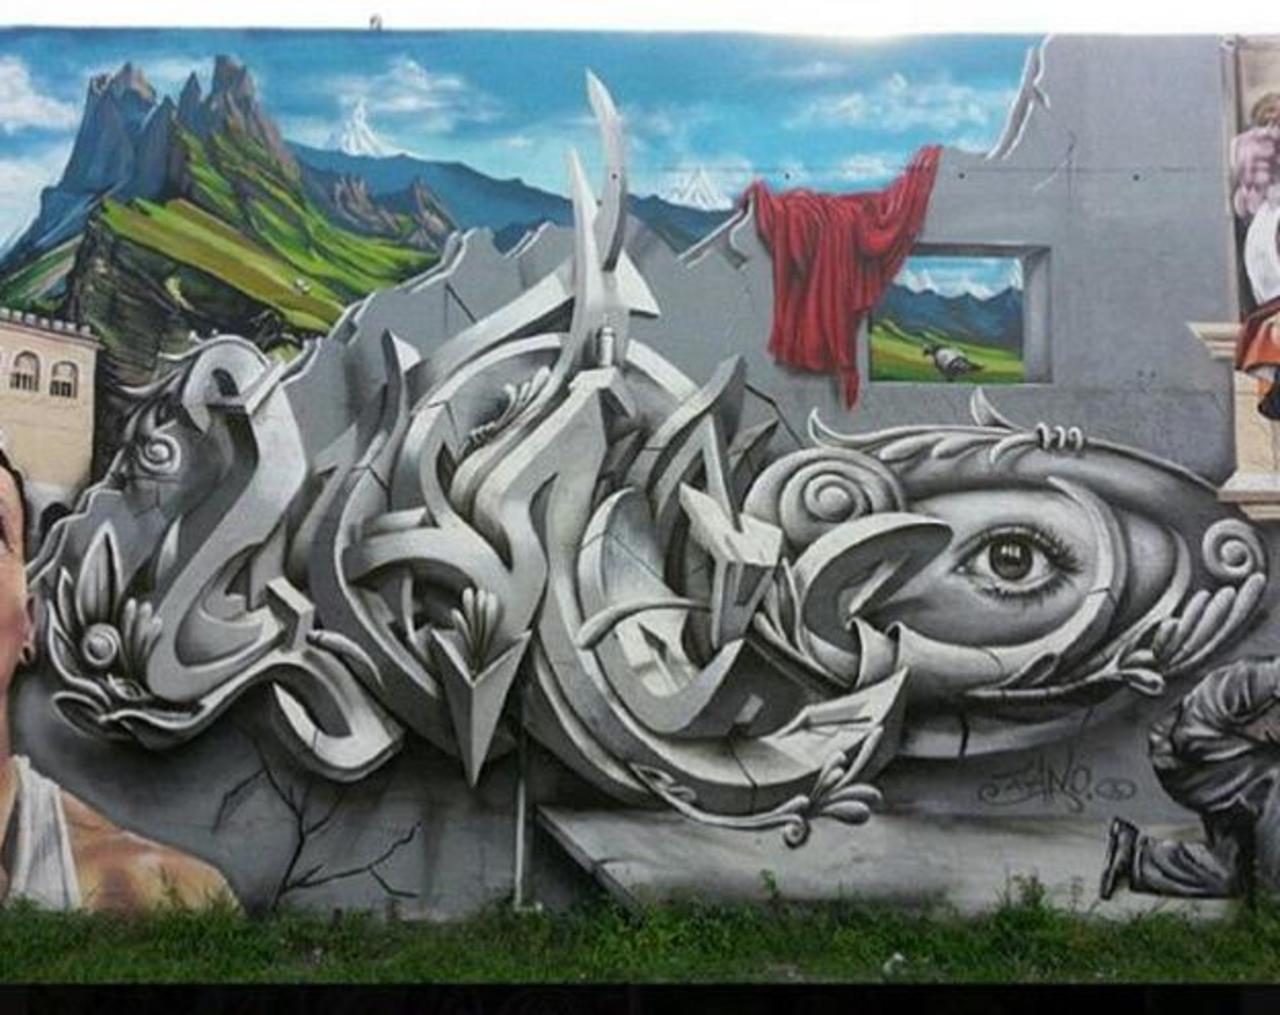 Street Art by Smog One

#art #mural #graffiti #streetart http://t.co/rc9QQxBbtZ